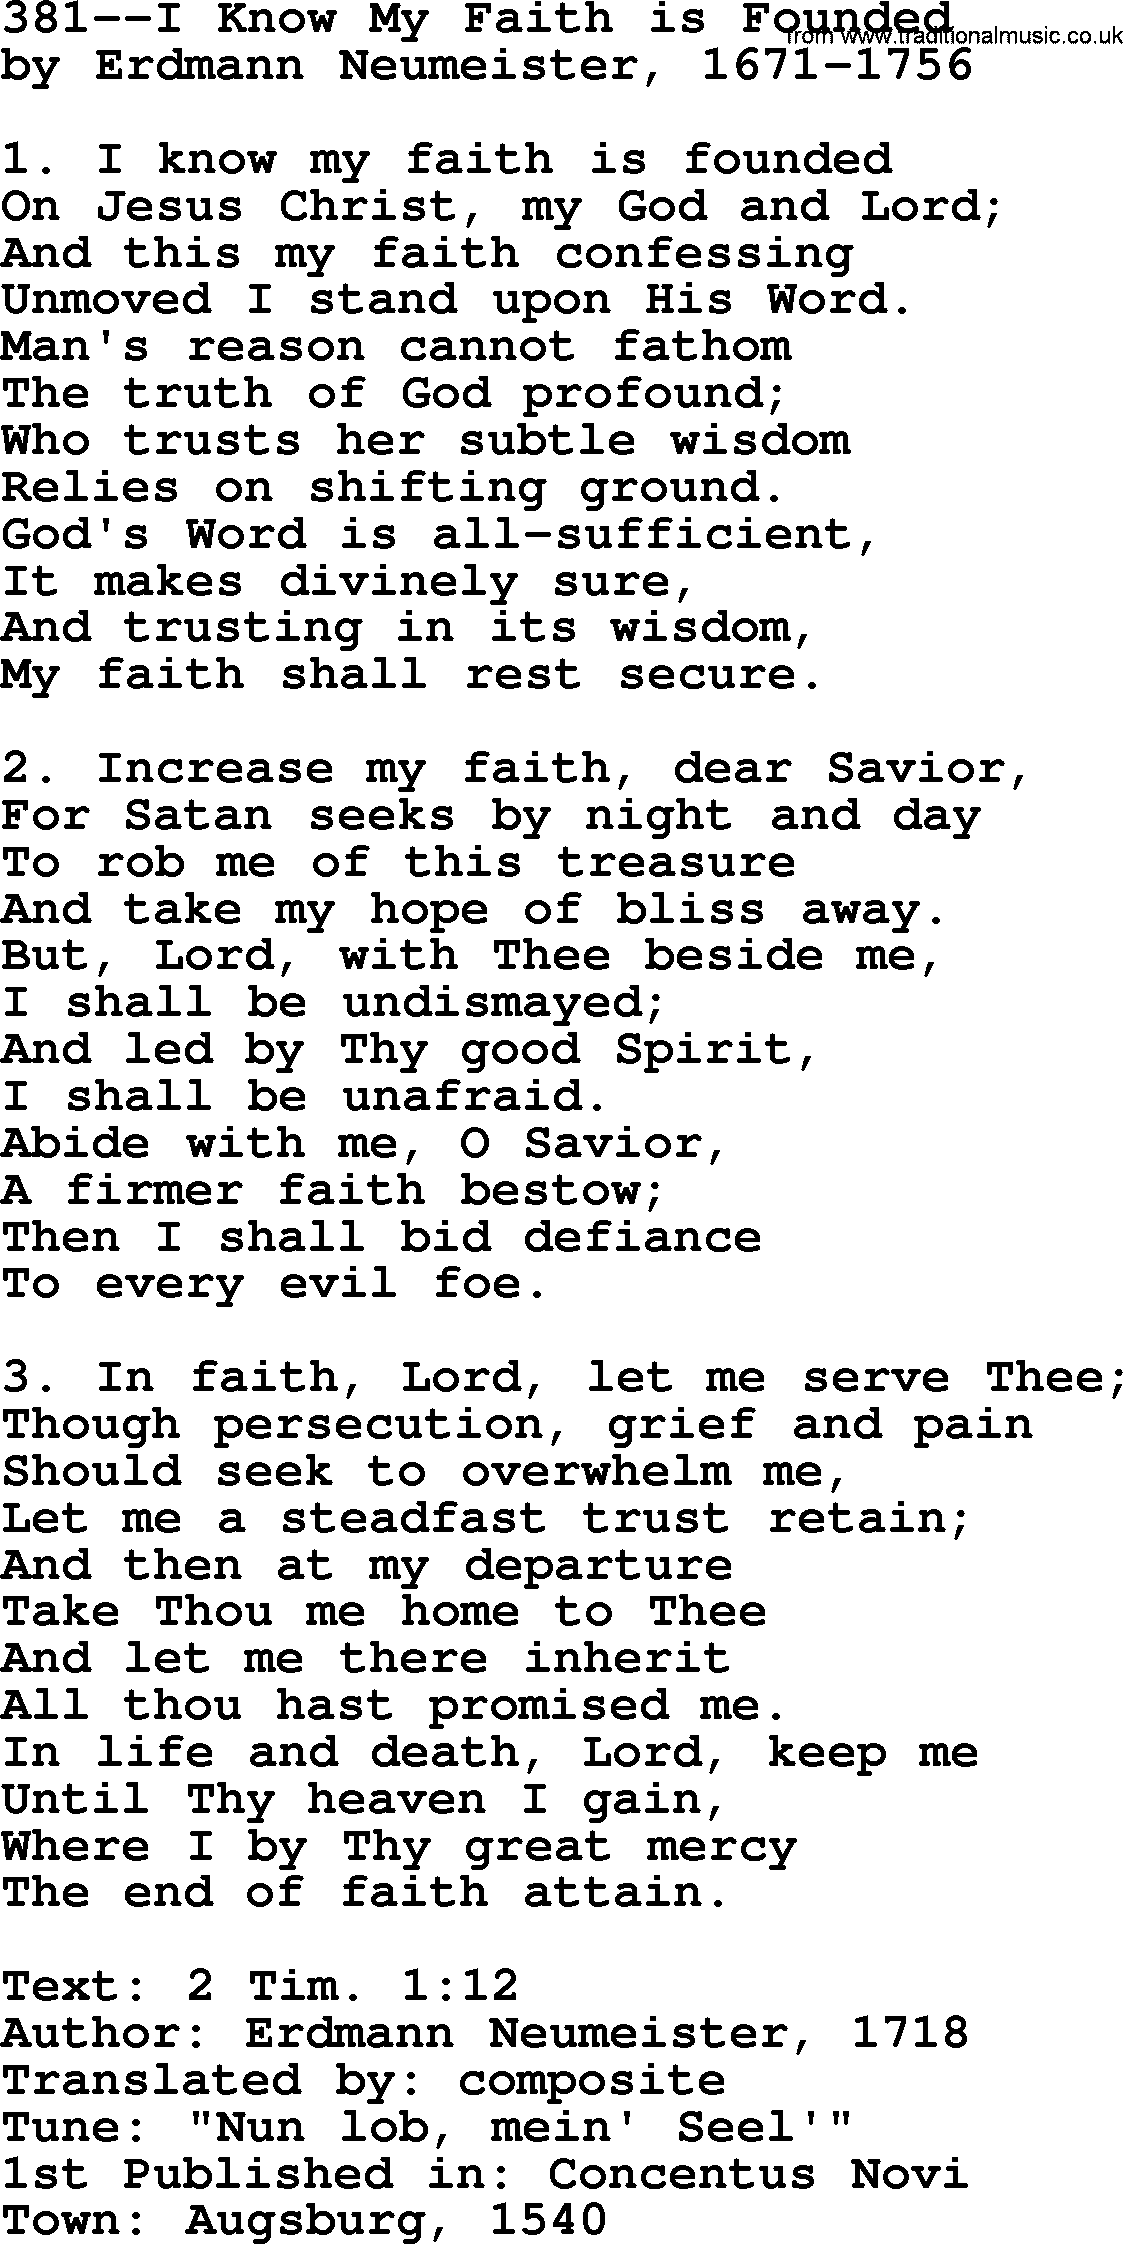 Lutheran Hymn: 381--I Know My Faith is Founded.txt lyrics with PDF